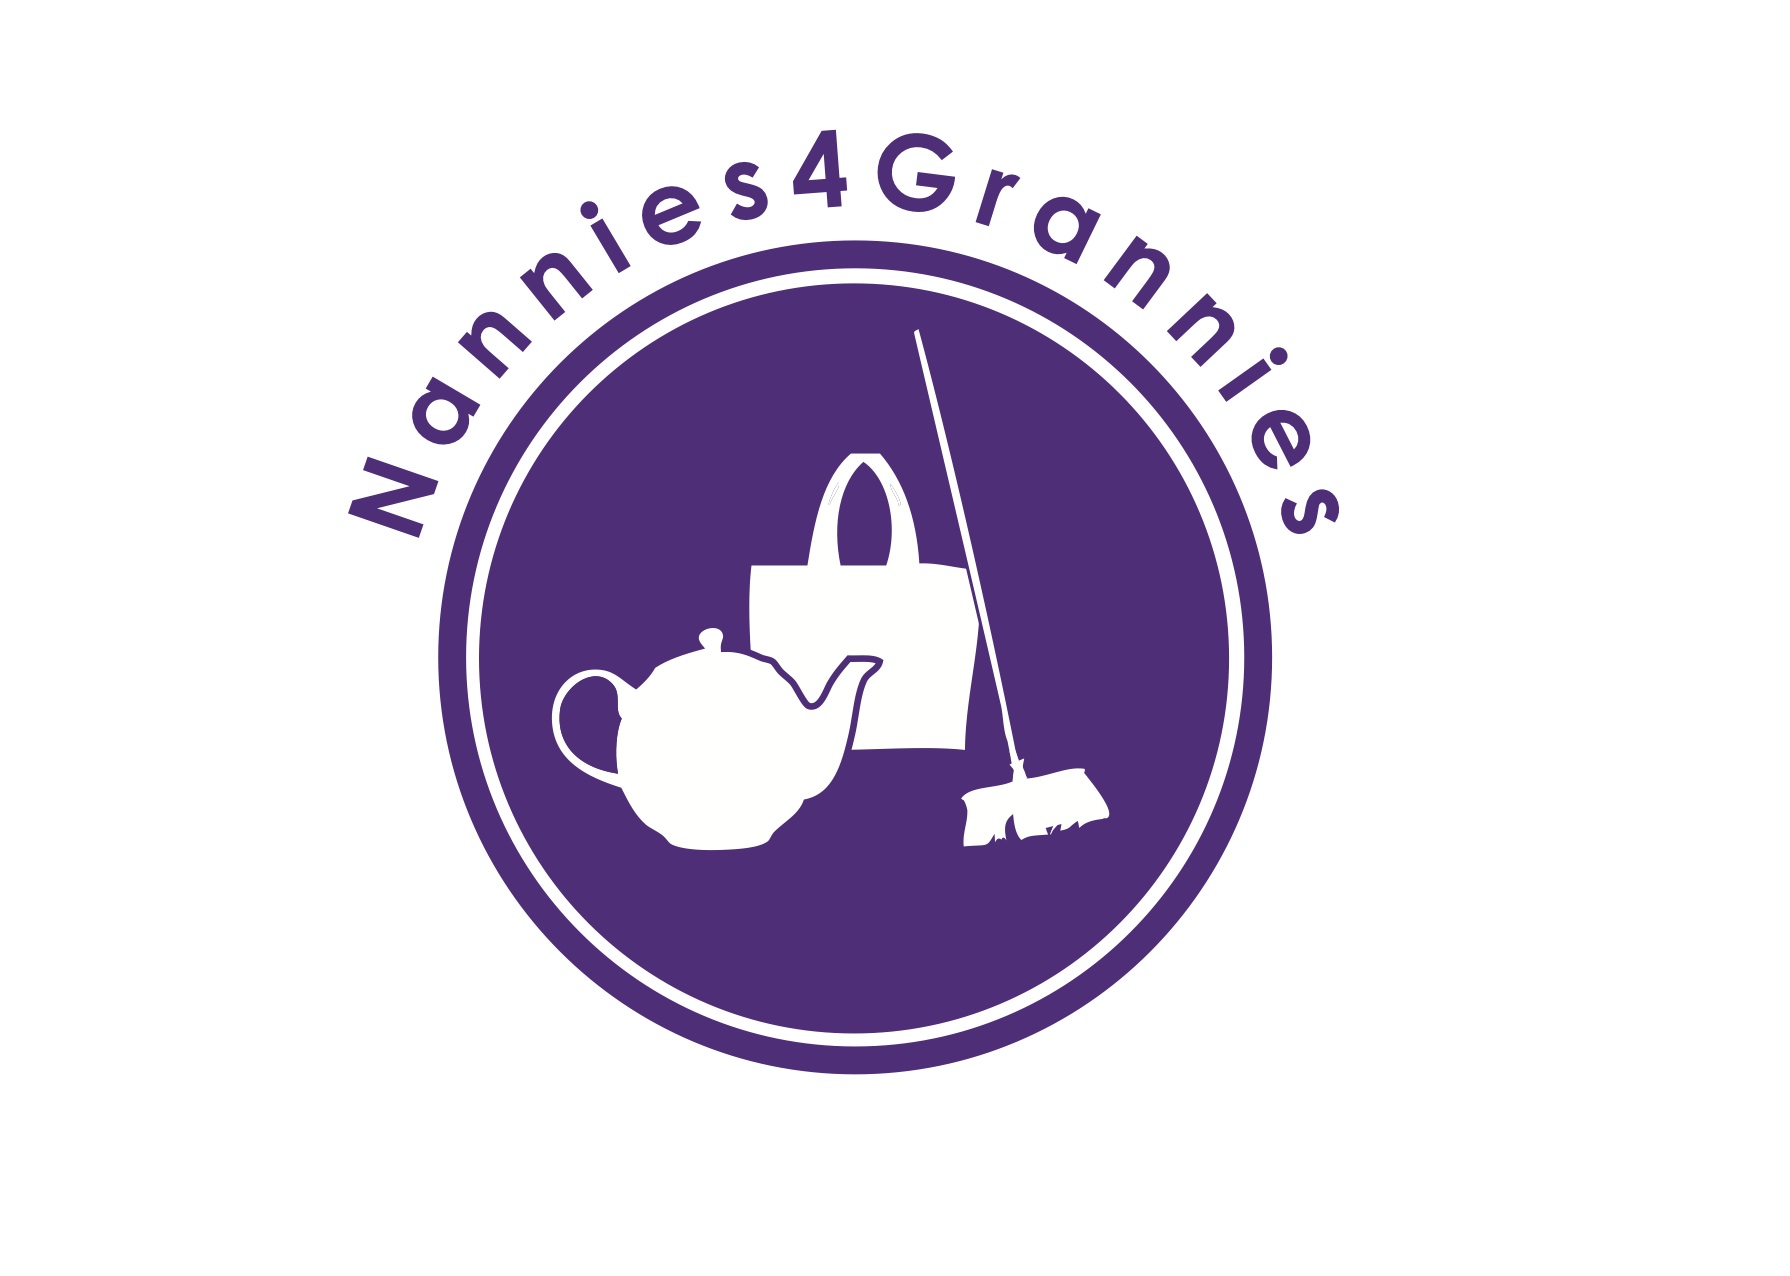 Nannies for Grannies Logo